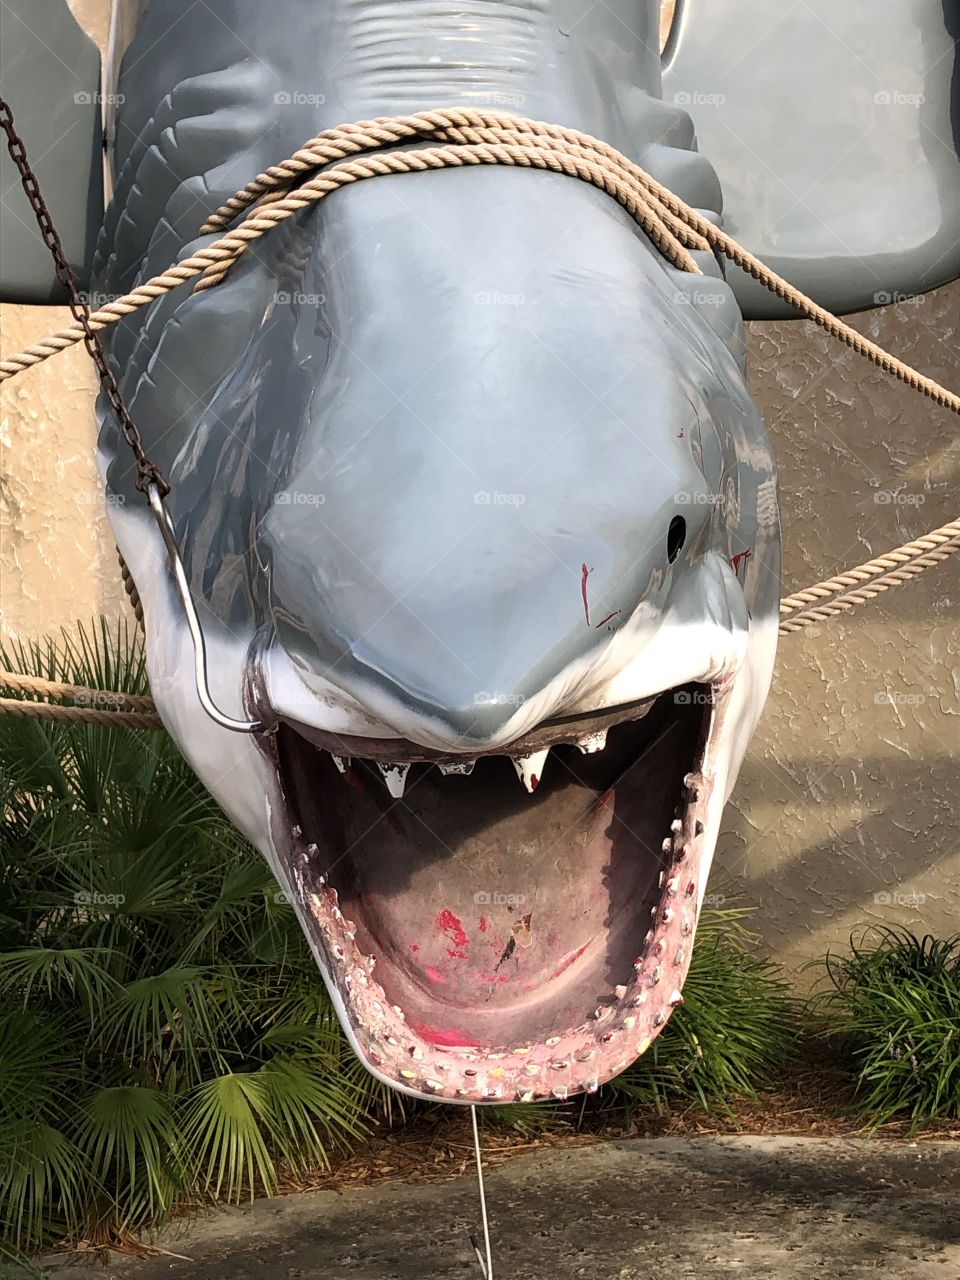 Shark statue from Florida!